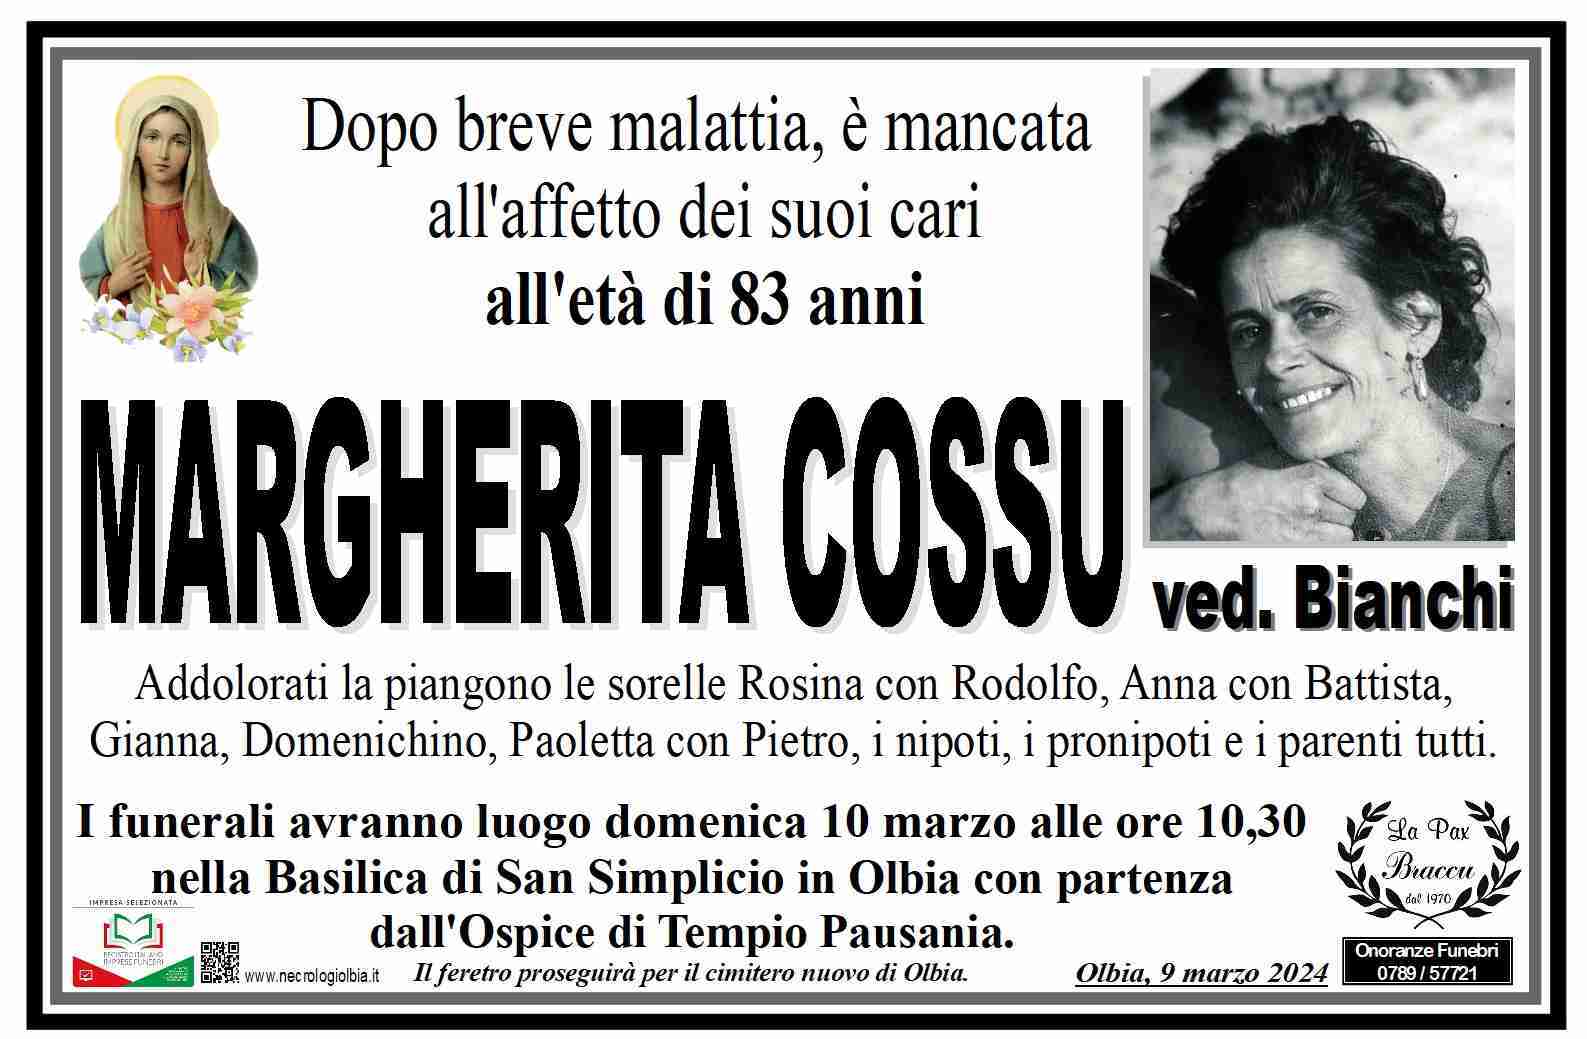 Margherita Cossu